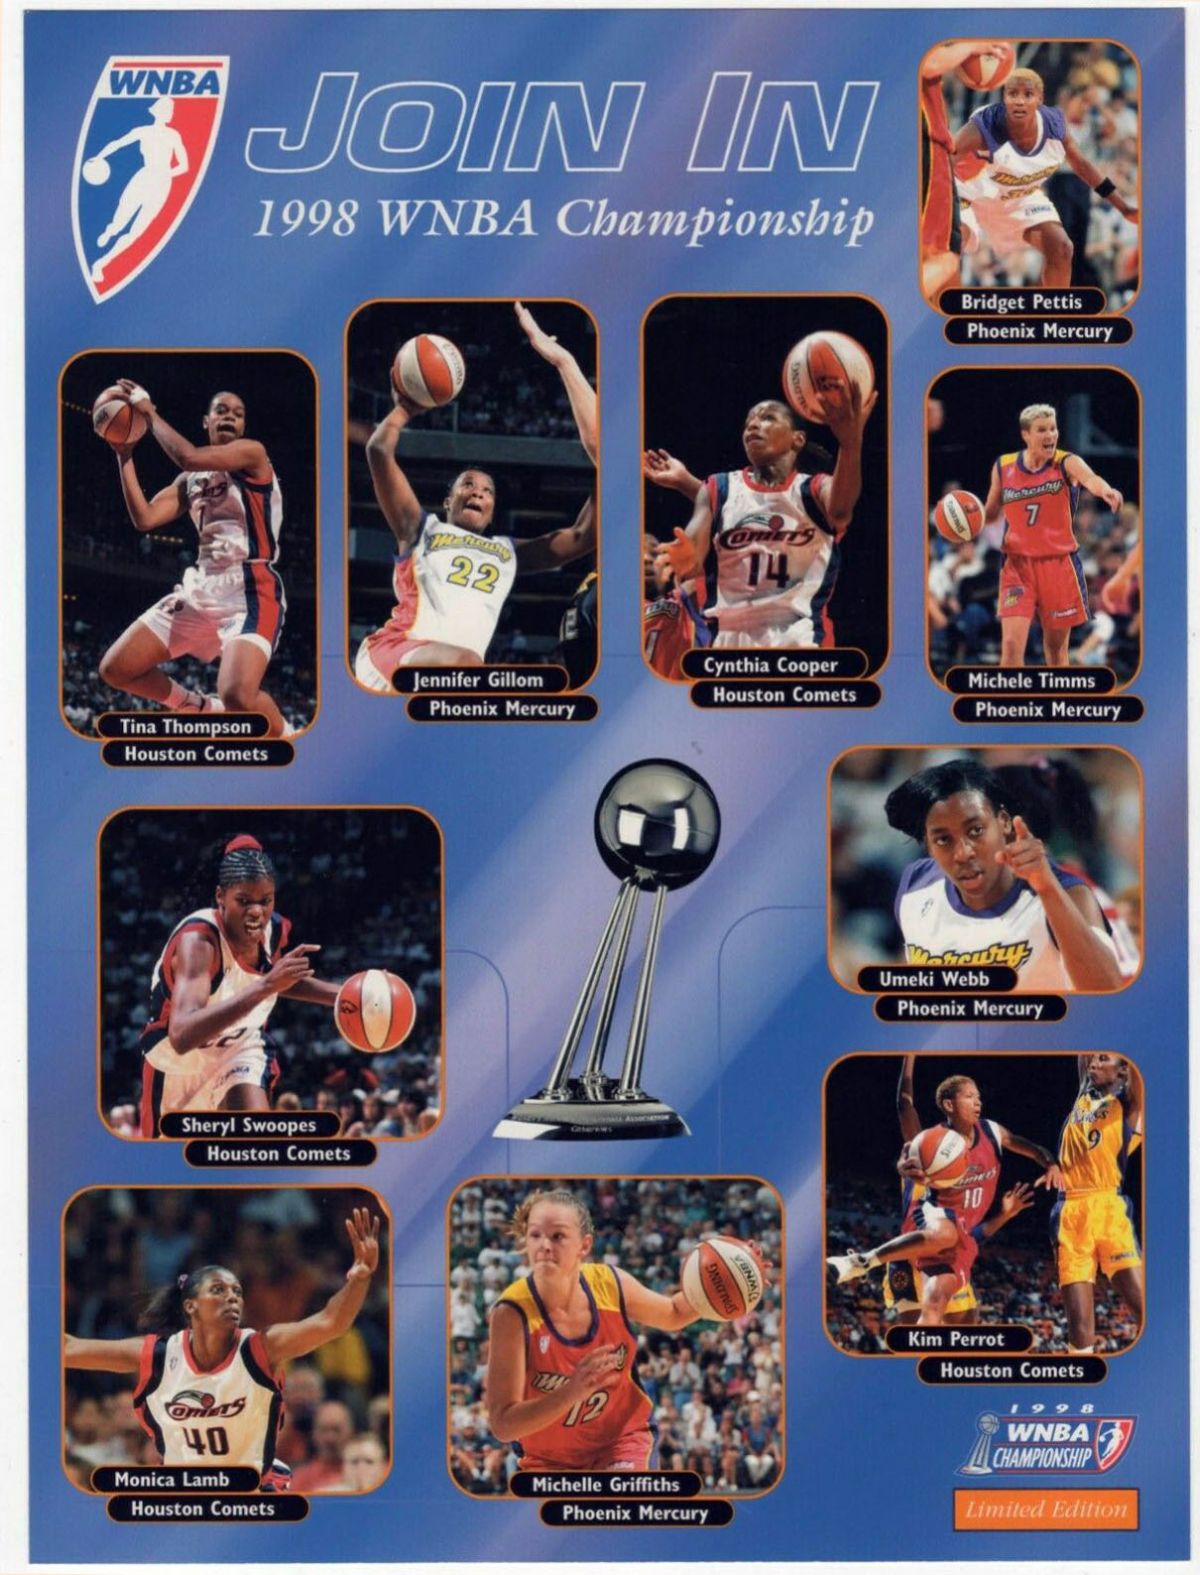 1998 WNBA Championship (Houston Comets vs. Phoenix Mercury